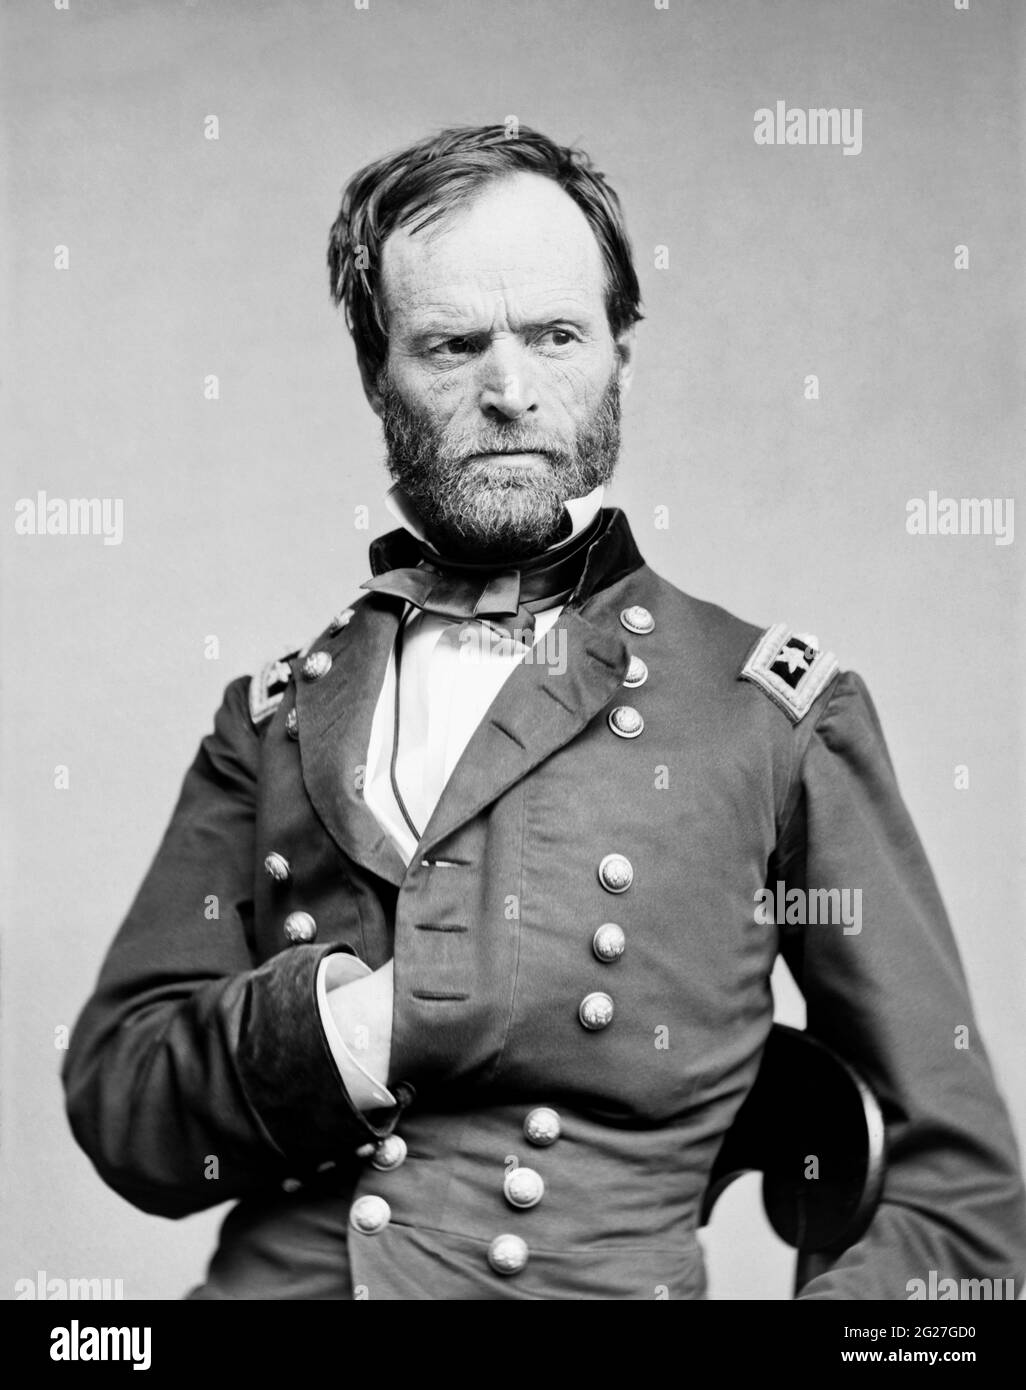 Porträt des Unionsgenerals William Tecumseh Sherman in seiner Bundesarmeuniform. Stockfoto